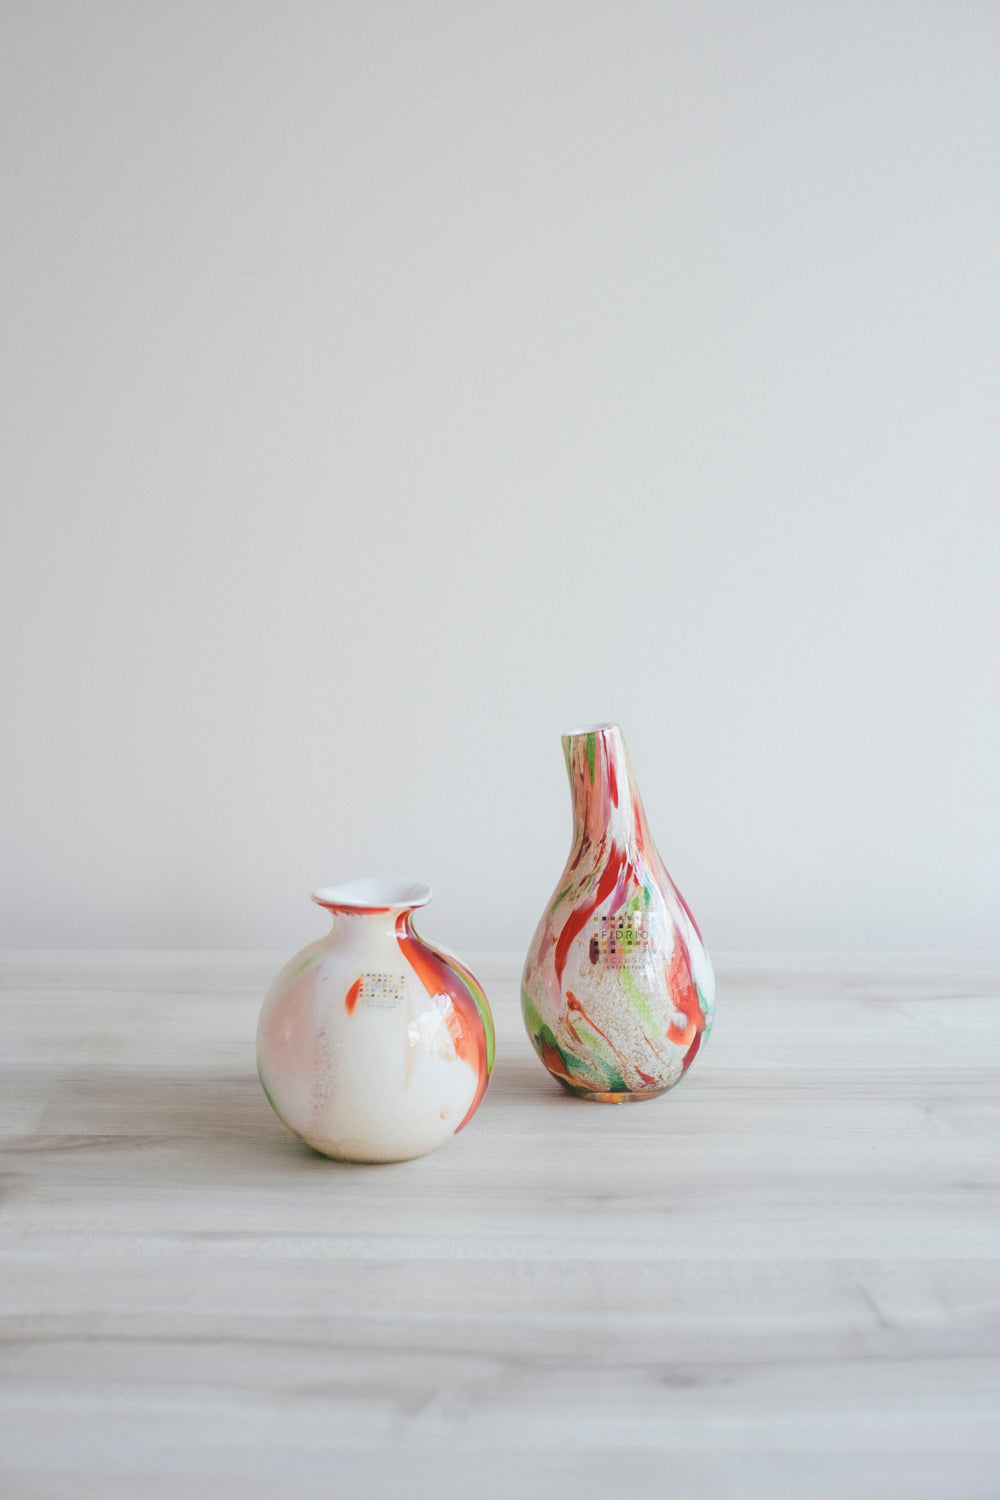 Flower Vase／花器・フラワーベース／FIDRIO　Mixed